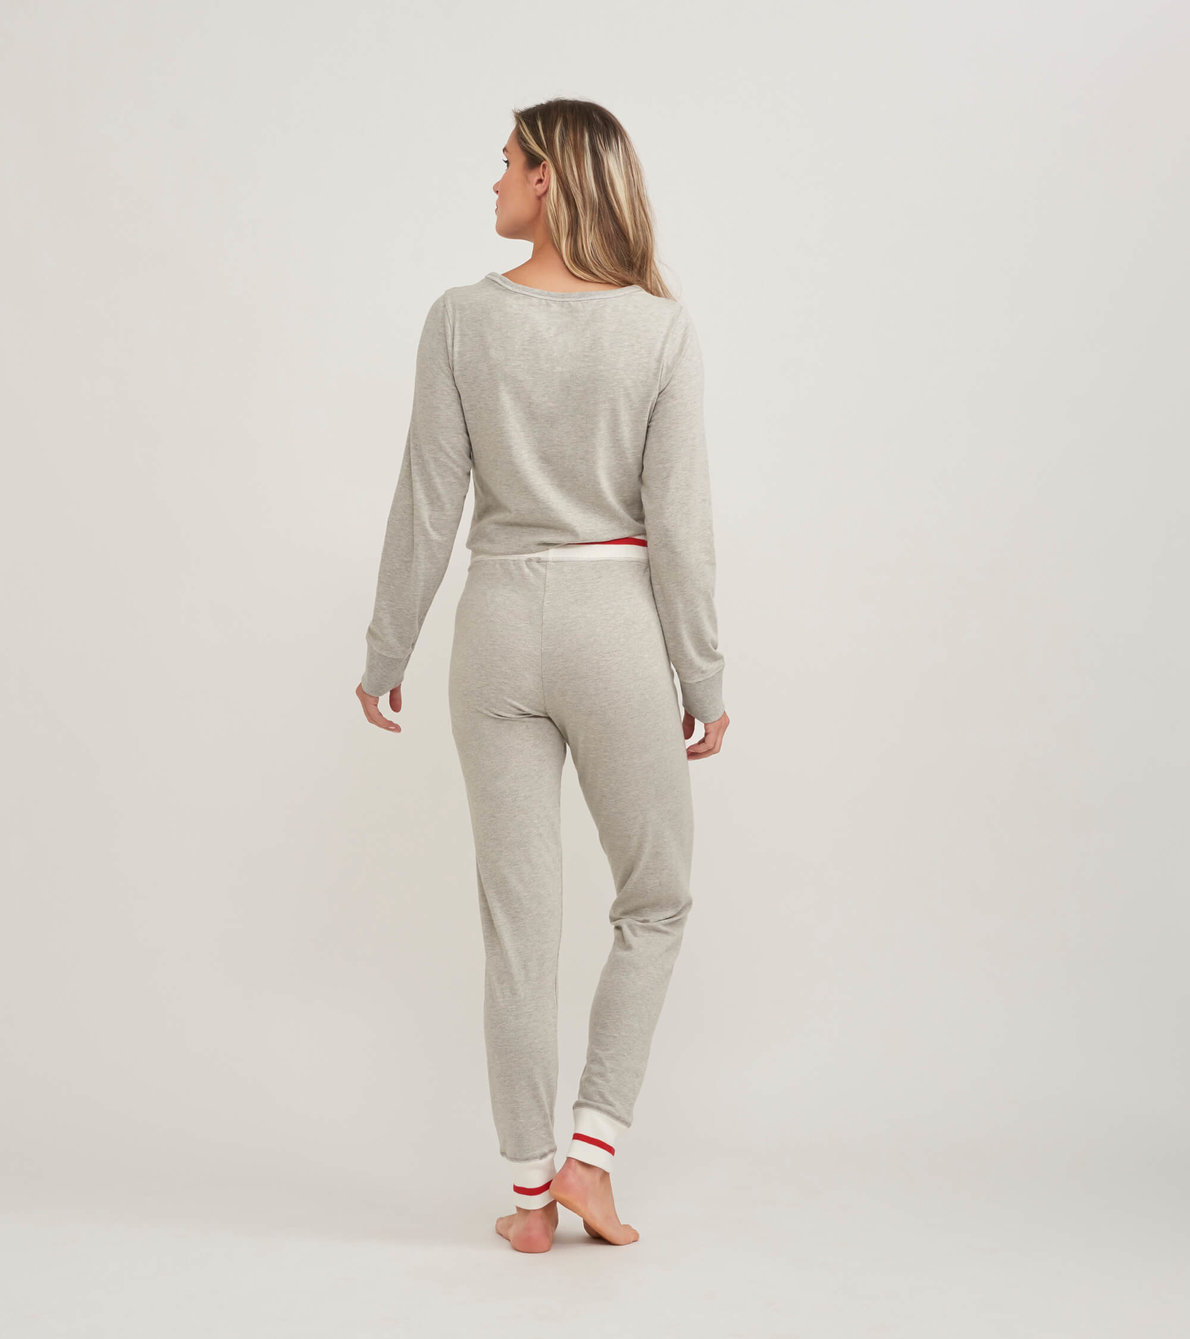 View larger image of Grey Work Sock Women's Tee and Leggings Pajama Separates